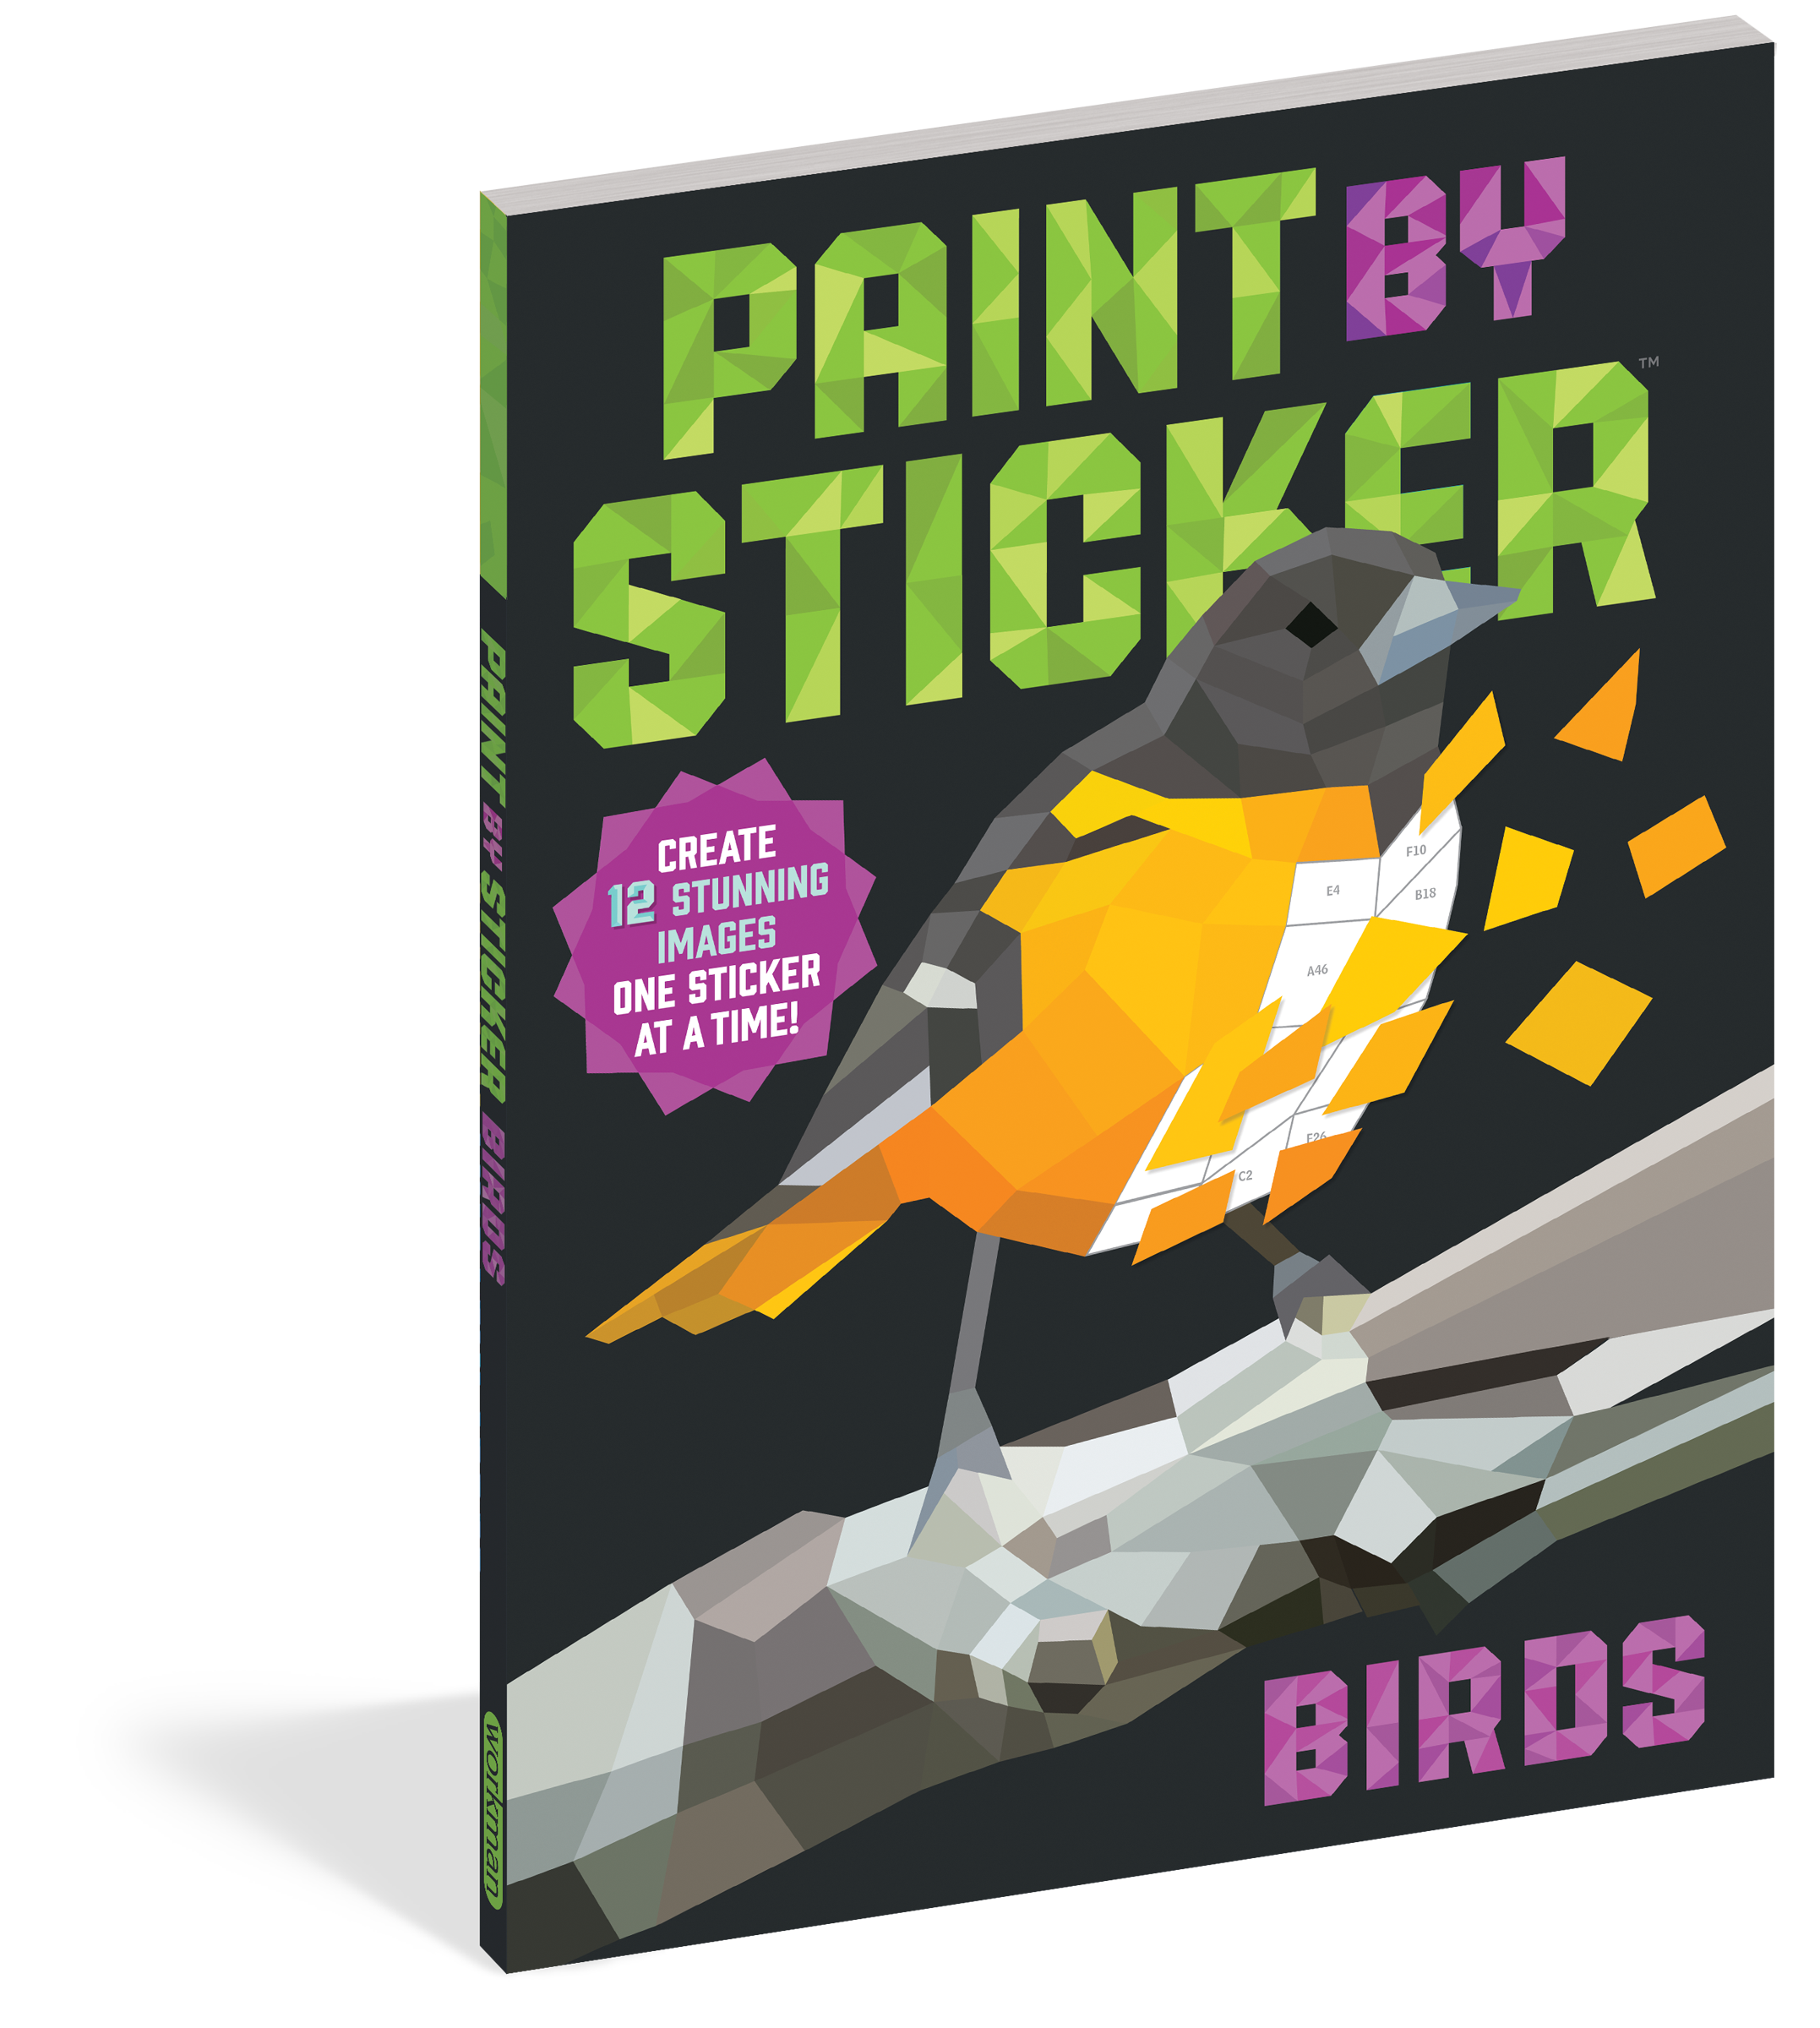 Paint By Sticker: Birds